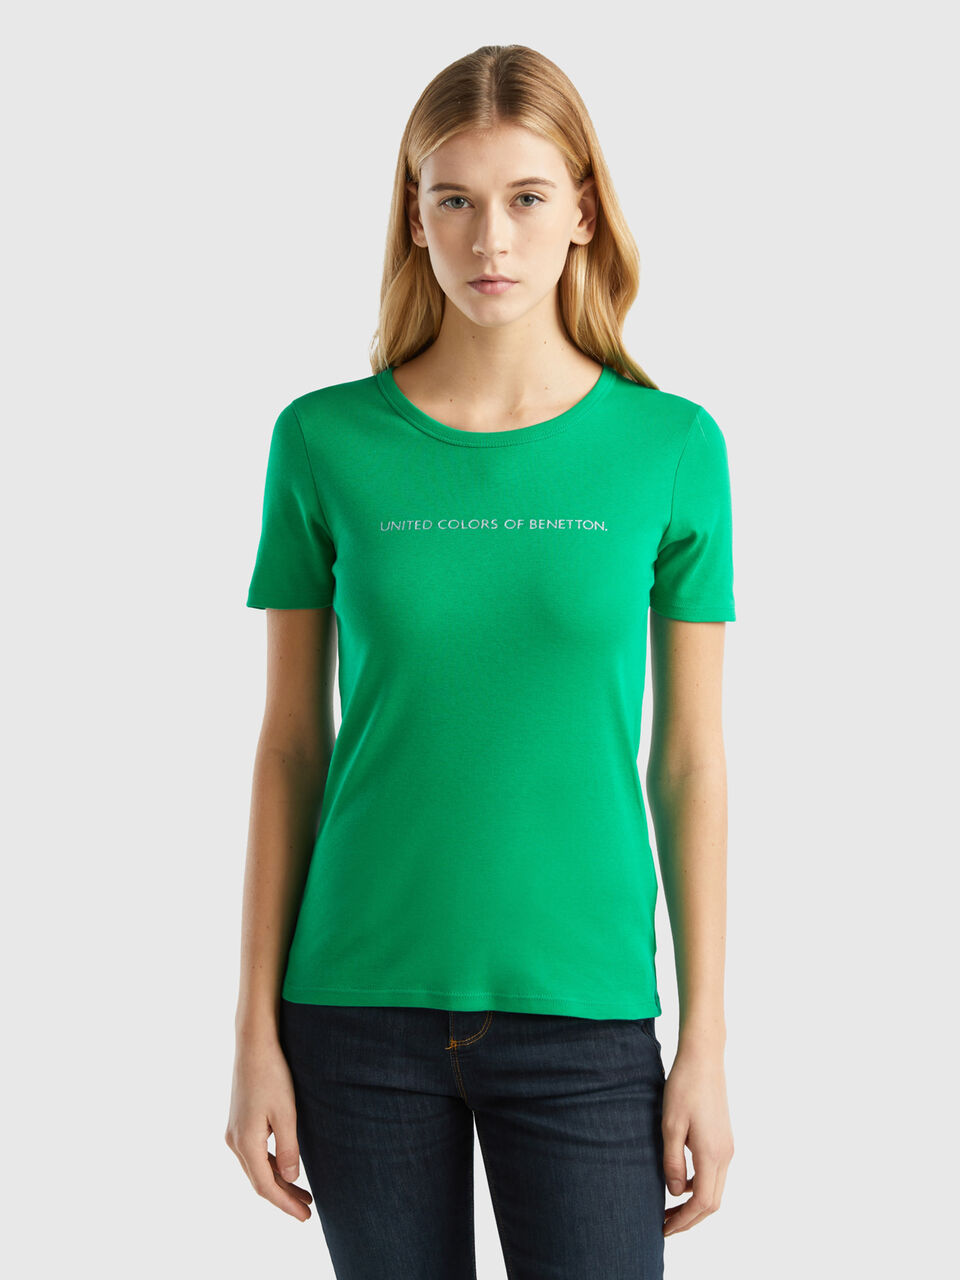 T-shirt in 100% logo print Benetton - cotton glitter | Green with